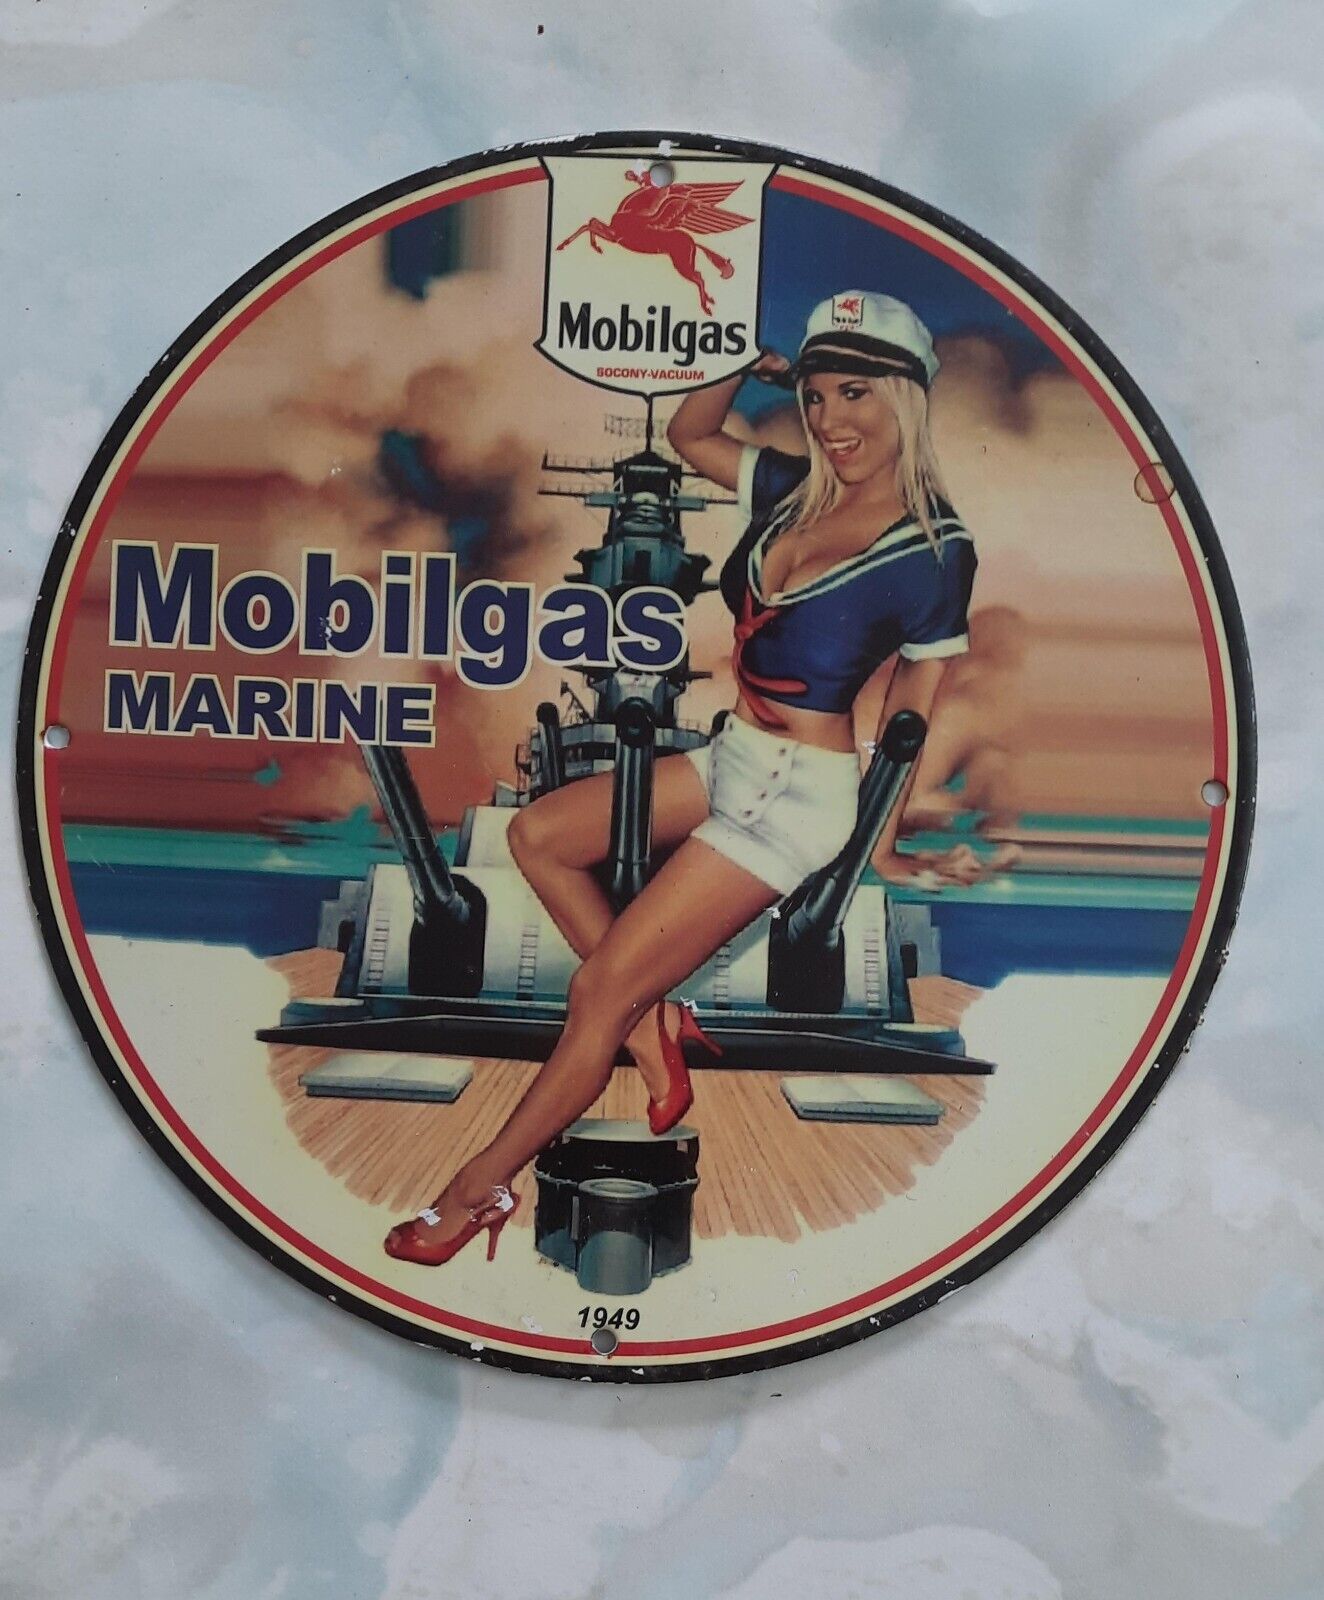 Mobilgas Marine pin up or hang porcelain sign for garage or mancave